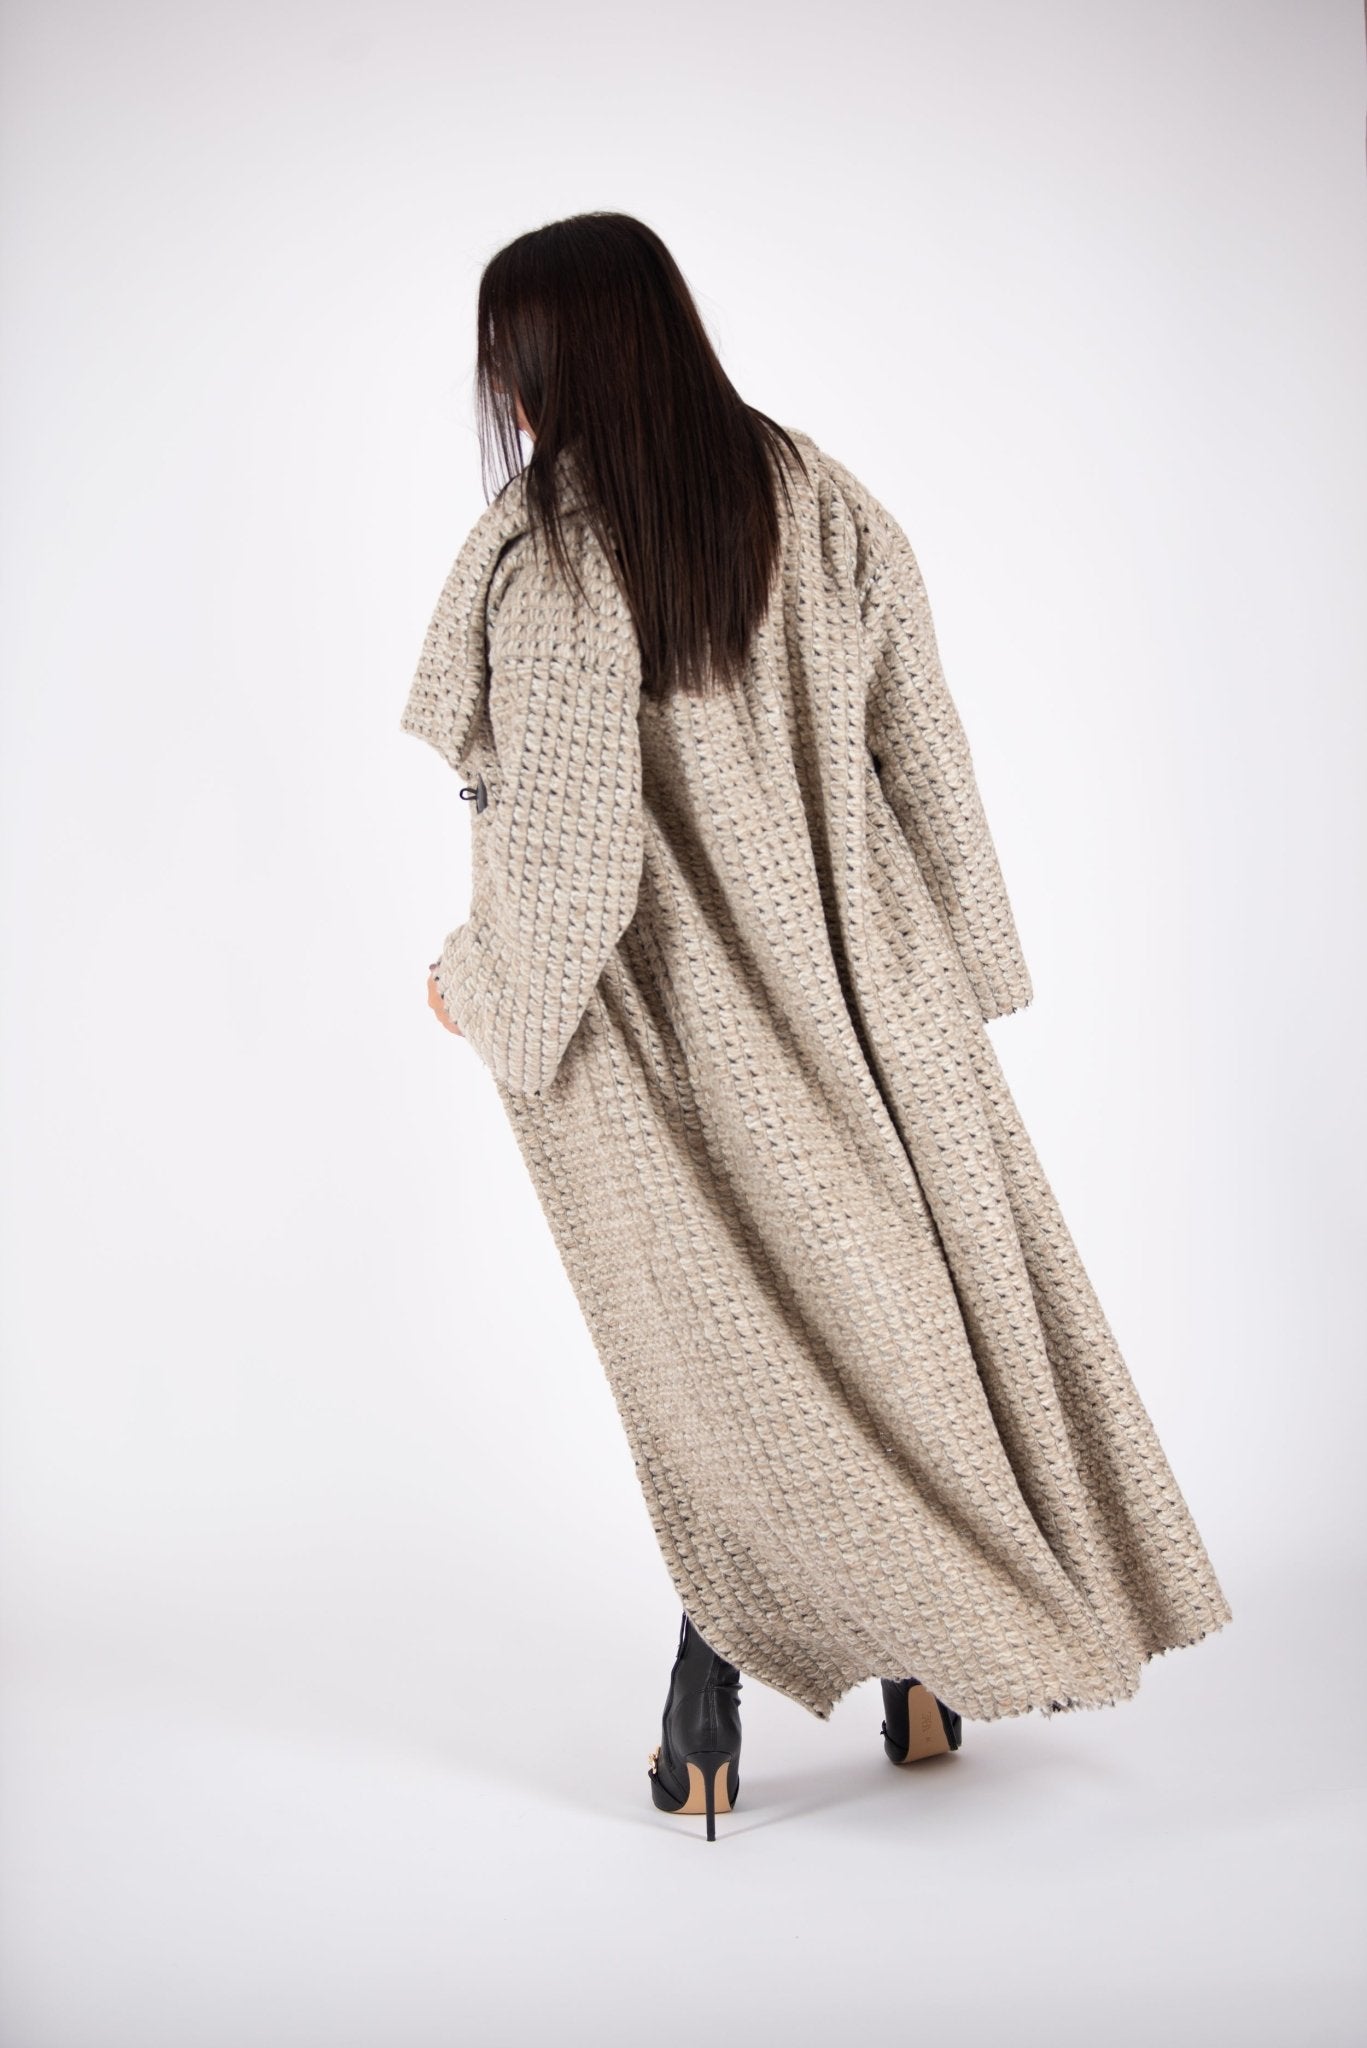 Wool Winter Beige Coat OFELIA SALE - EUG FASHION EugFashion 